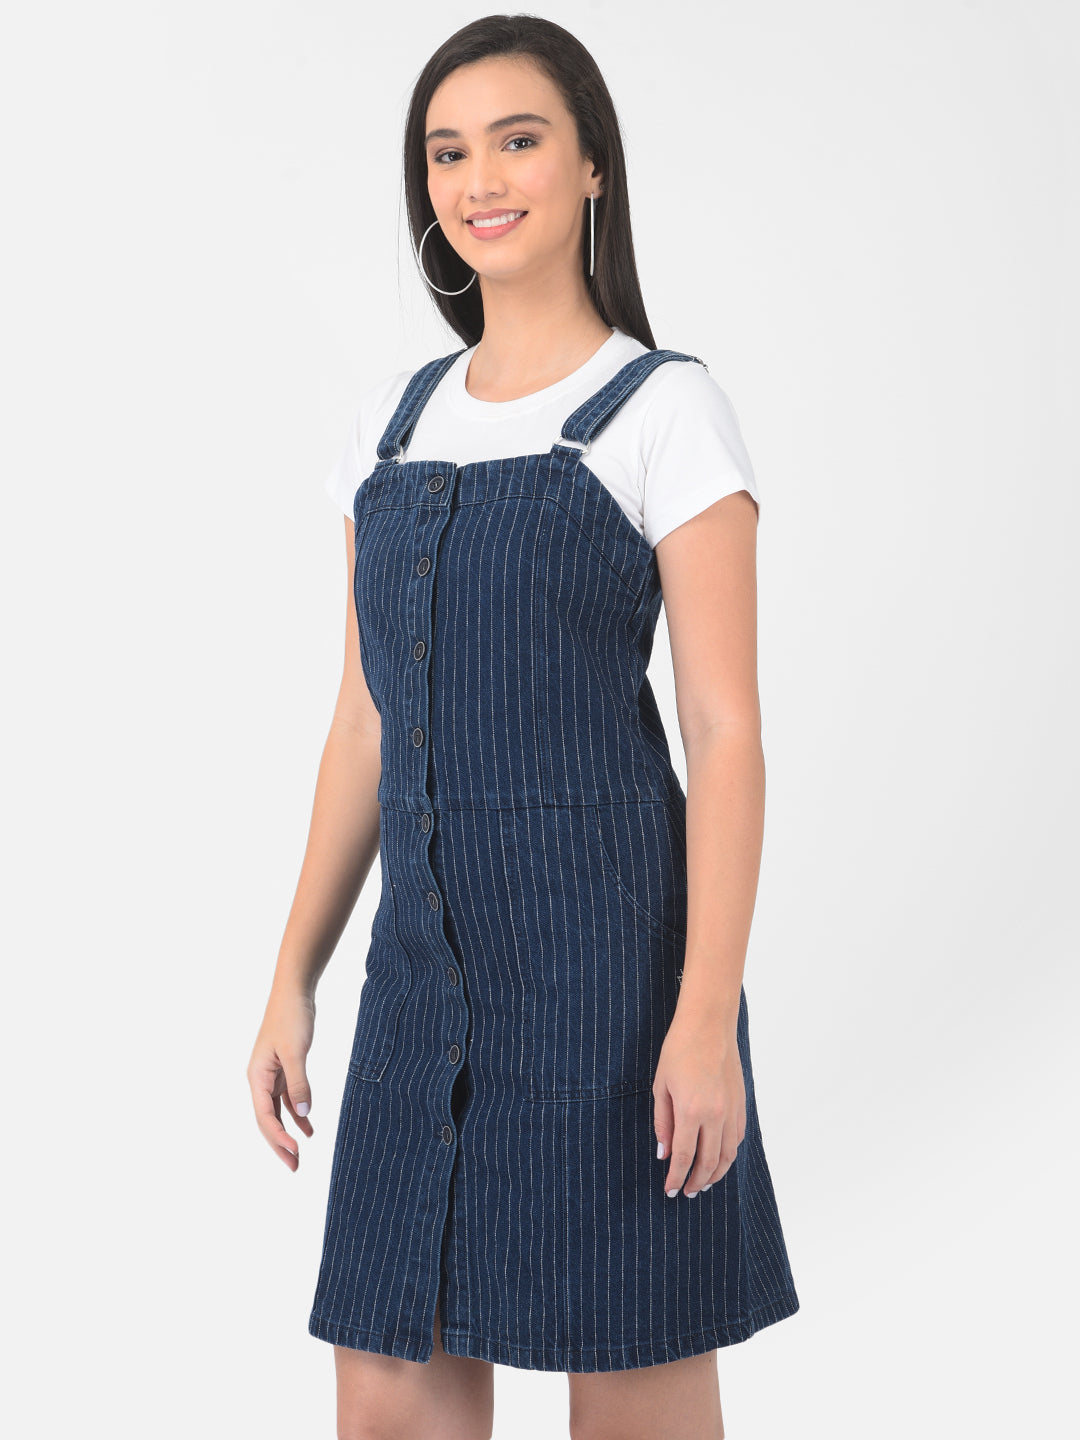 Blue Striped Pinafore Dress - Women Dresses